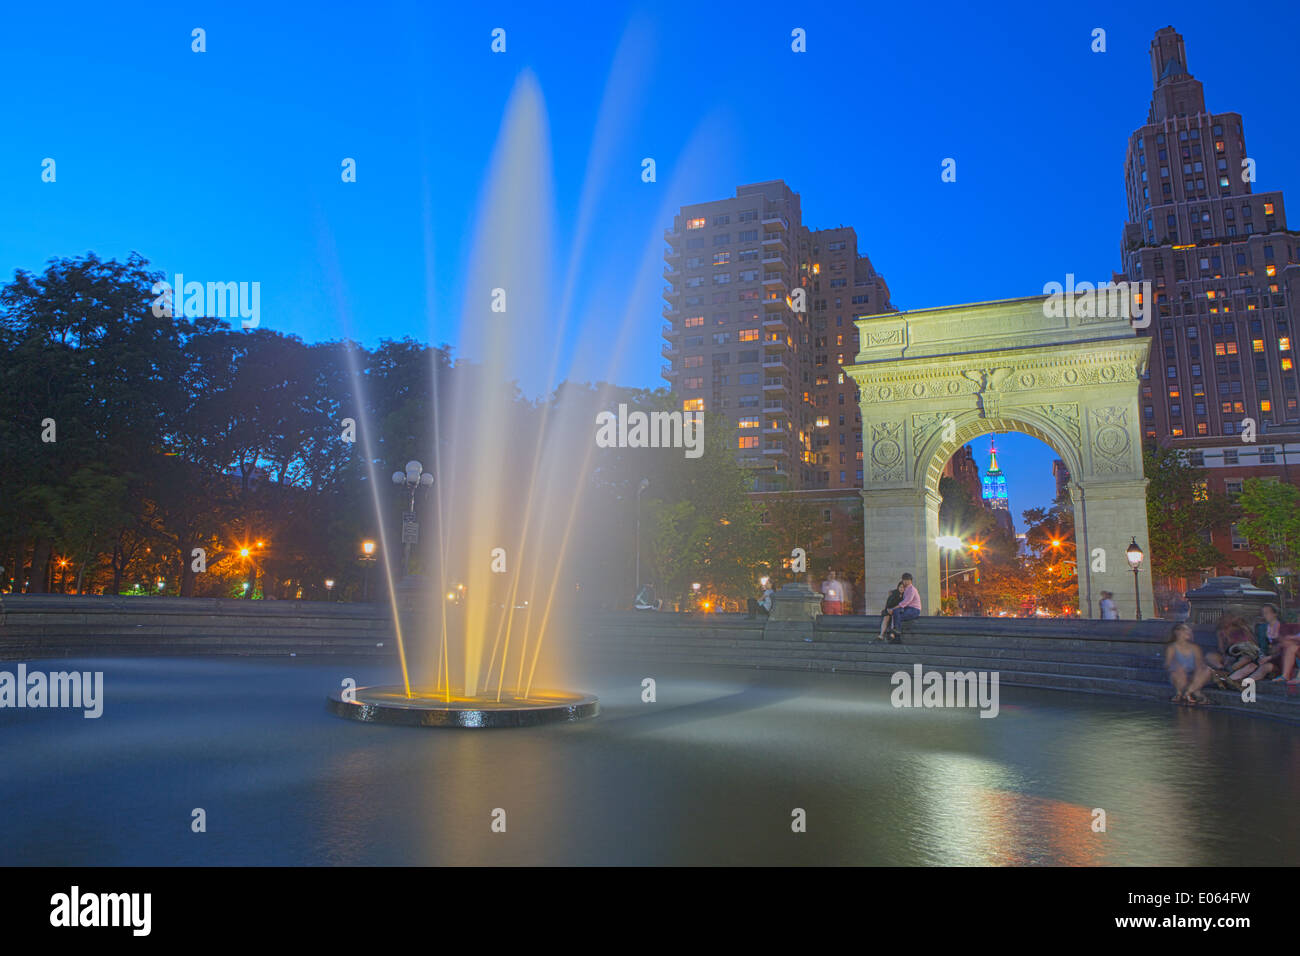 Washington Square Park Central Fountain, New York, New York, USA Stock Photo